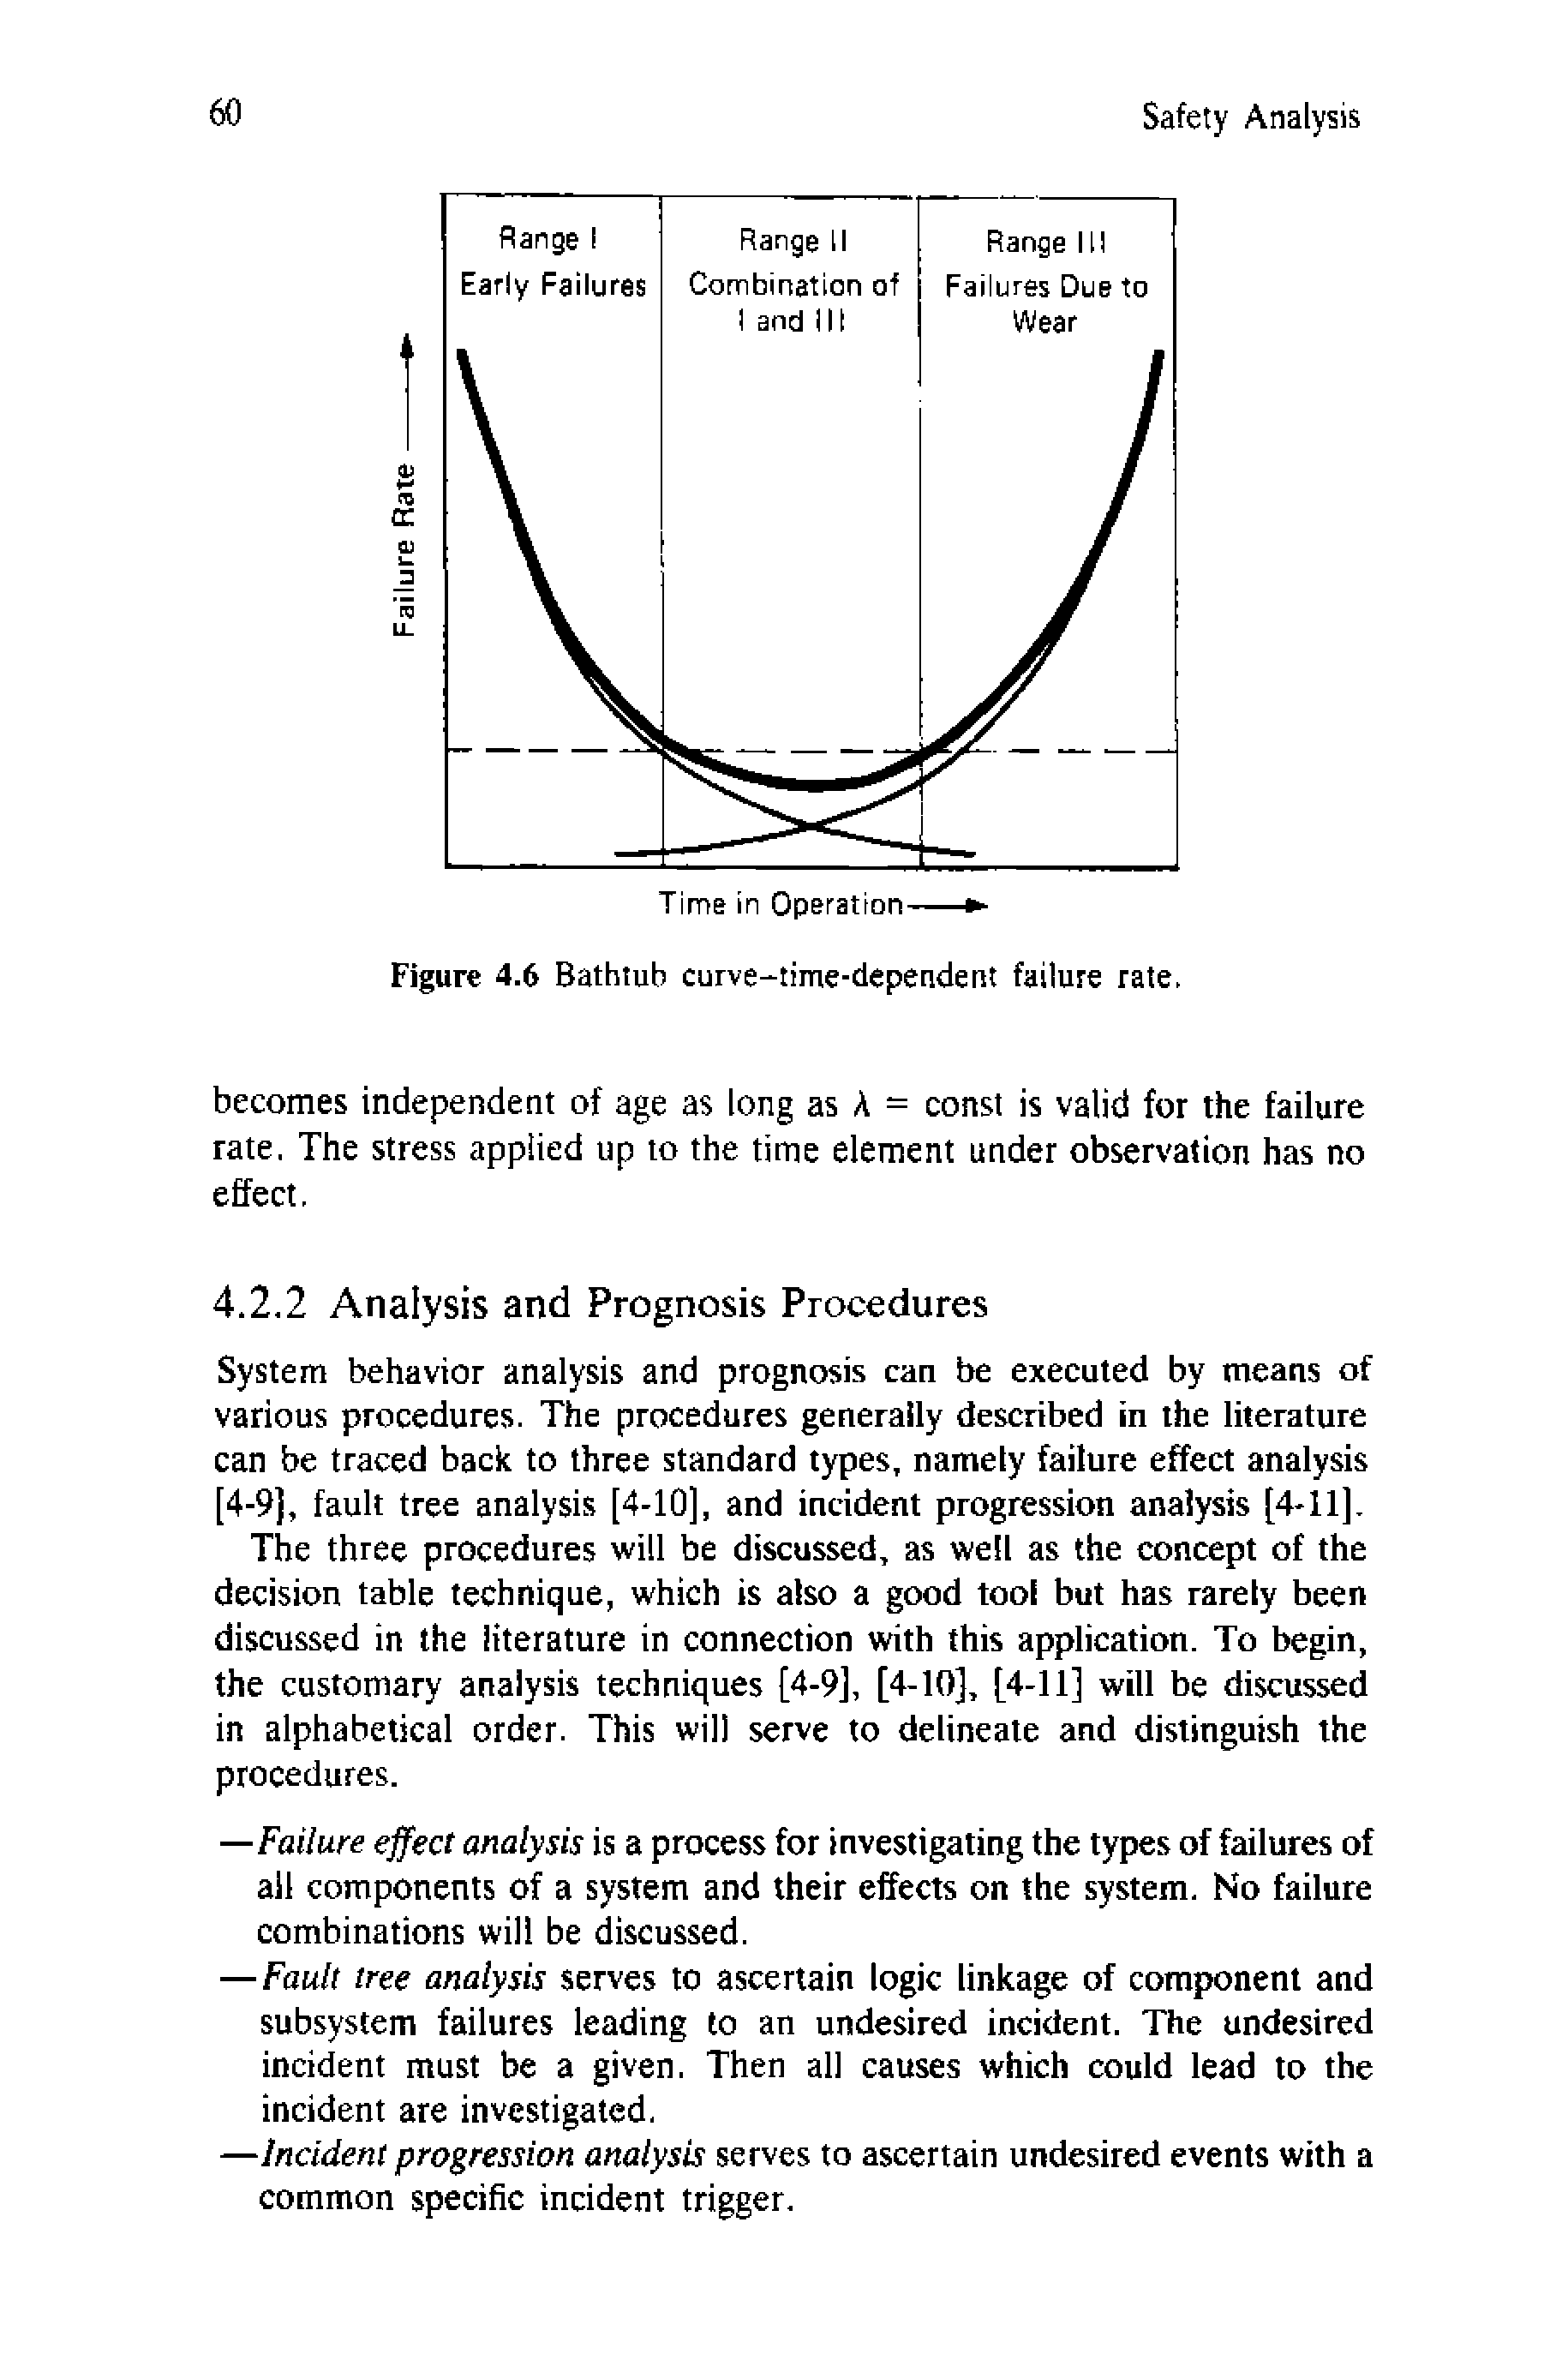 Figure 4.6 Bathtub curve-time-dependent failure rate.